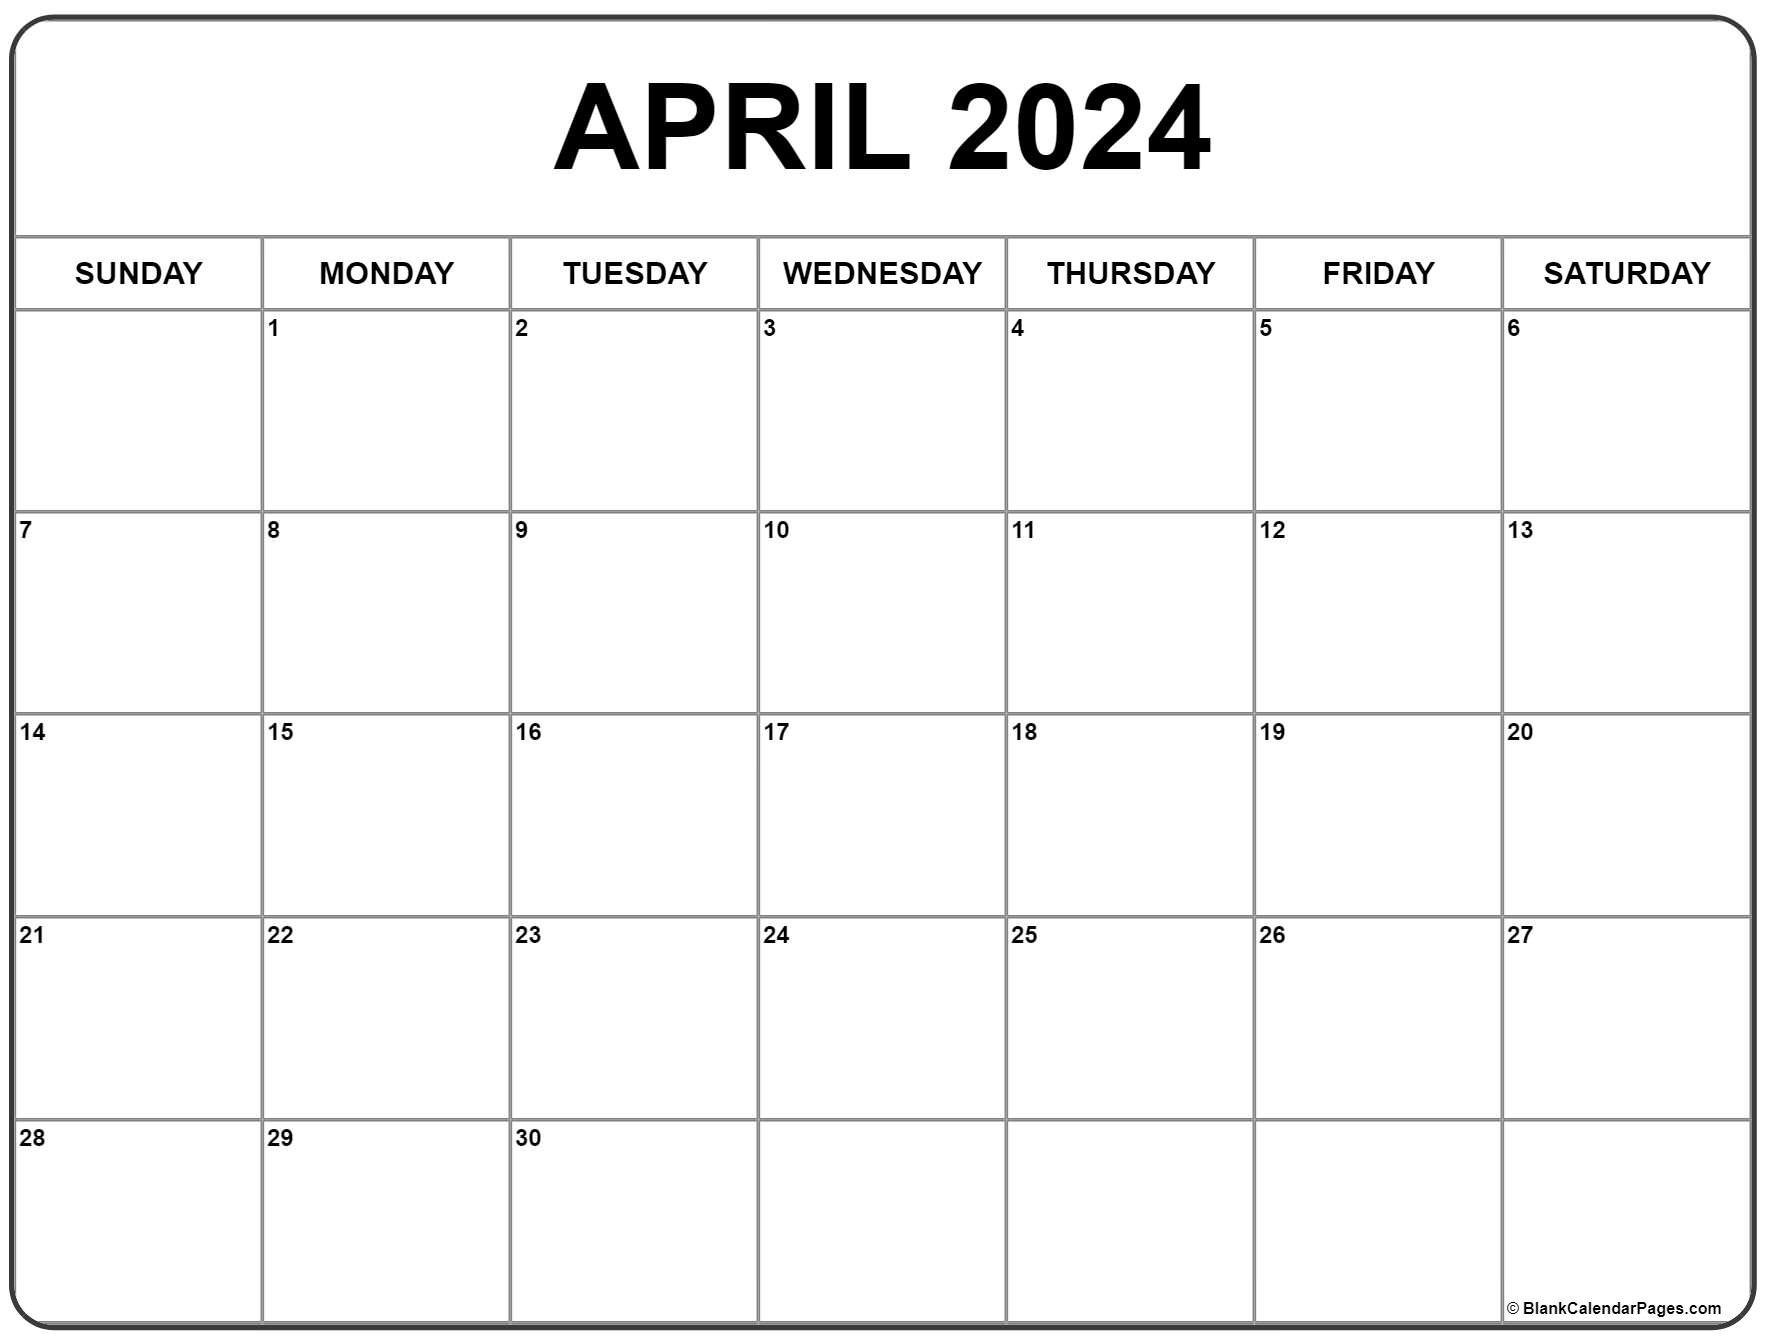 April 2024 Calendar | Free Printable Calendar for Calendar April 2024 Printable